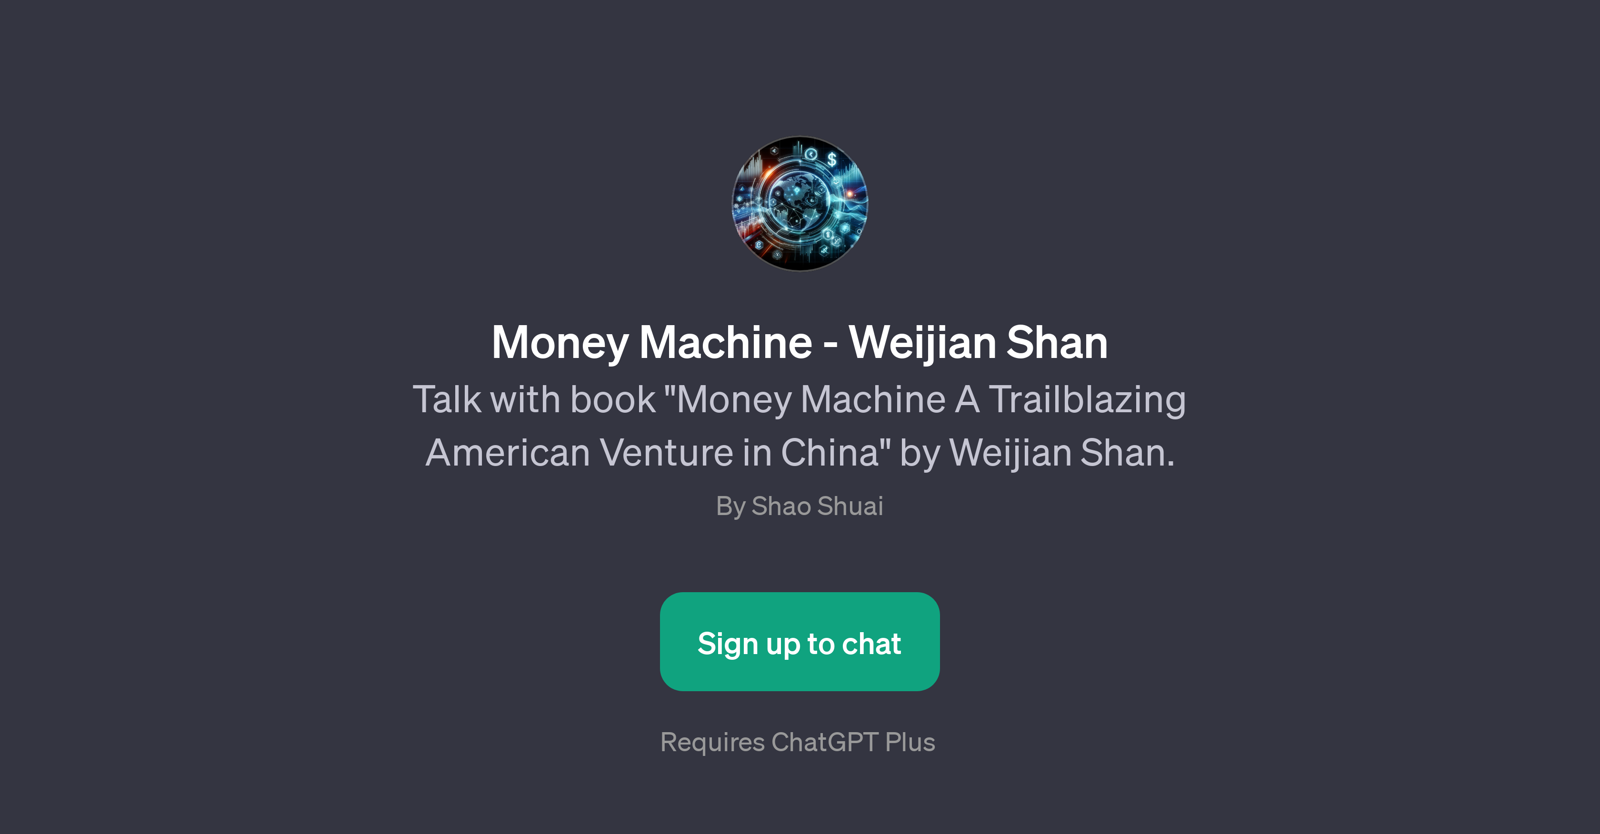 Money Machine - Weijian Shan website